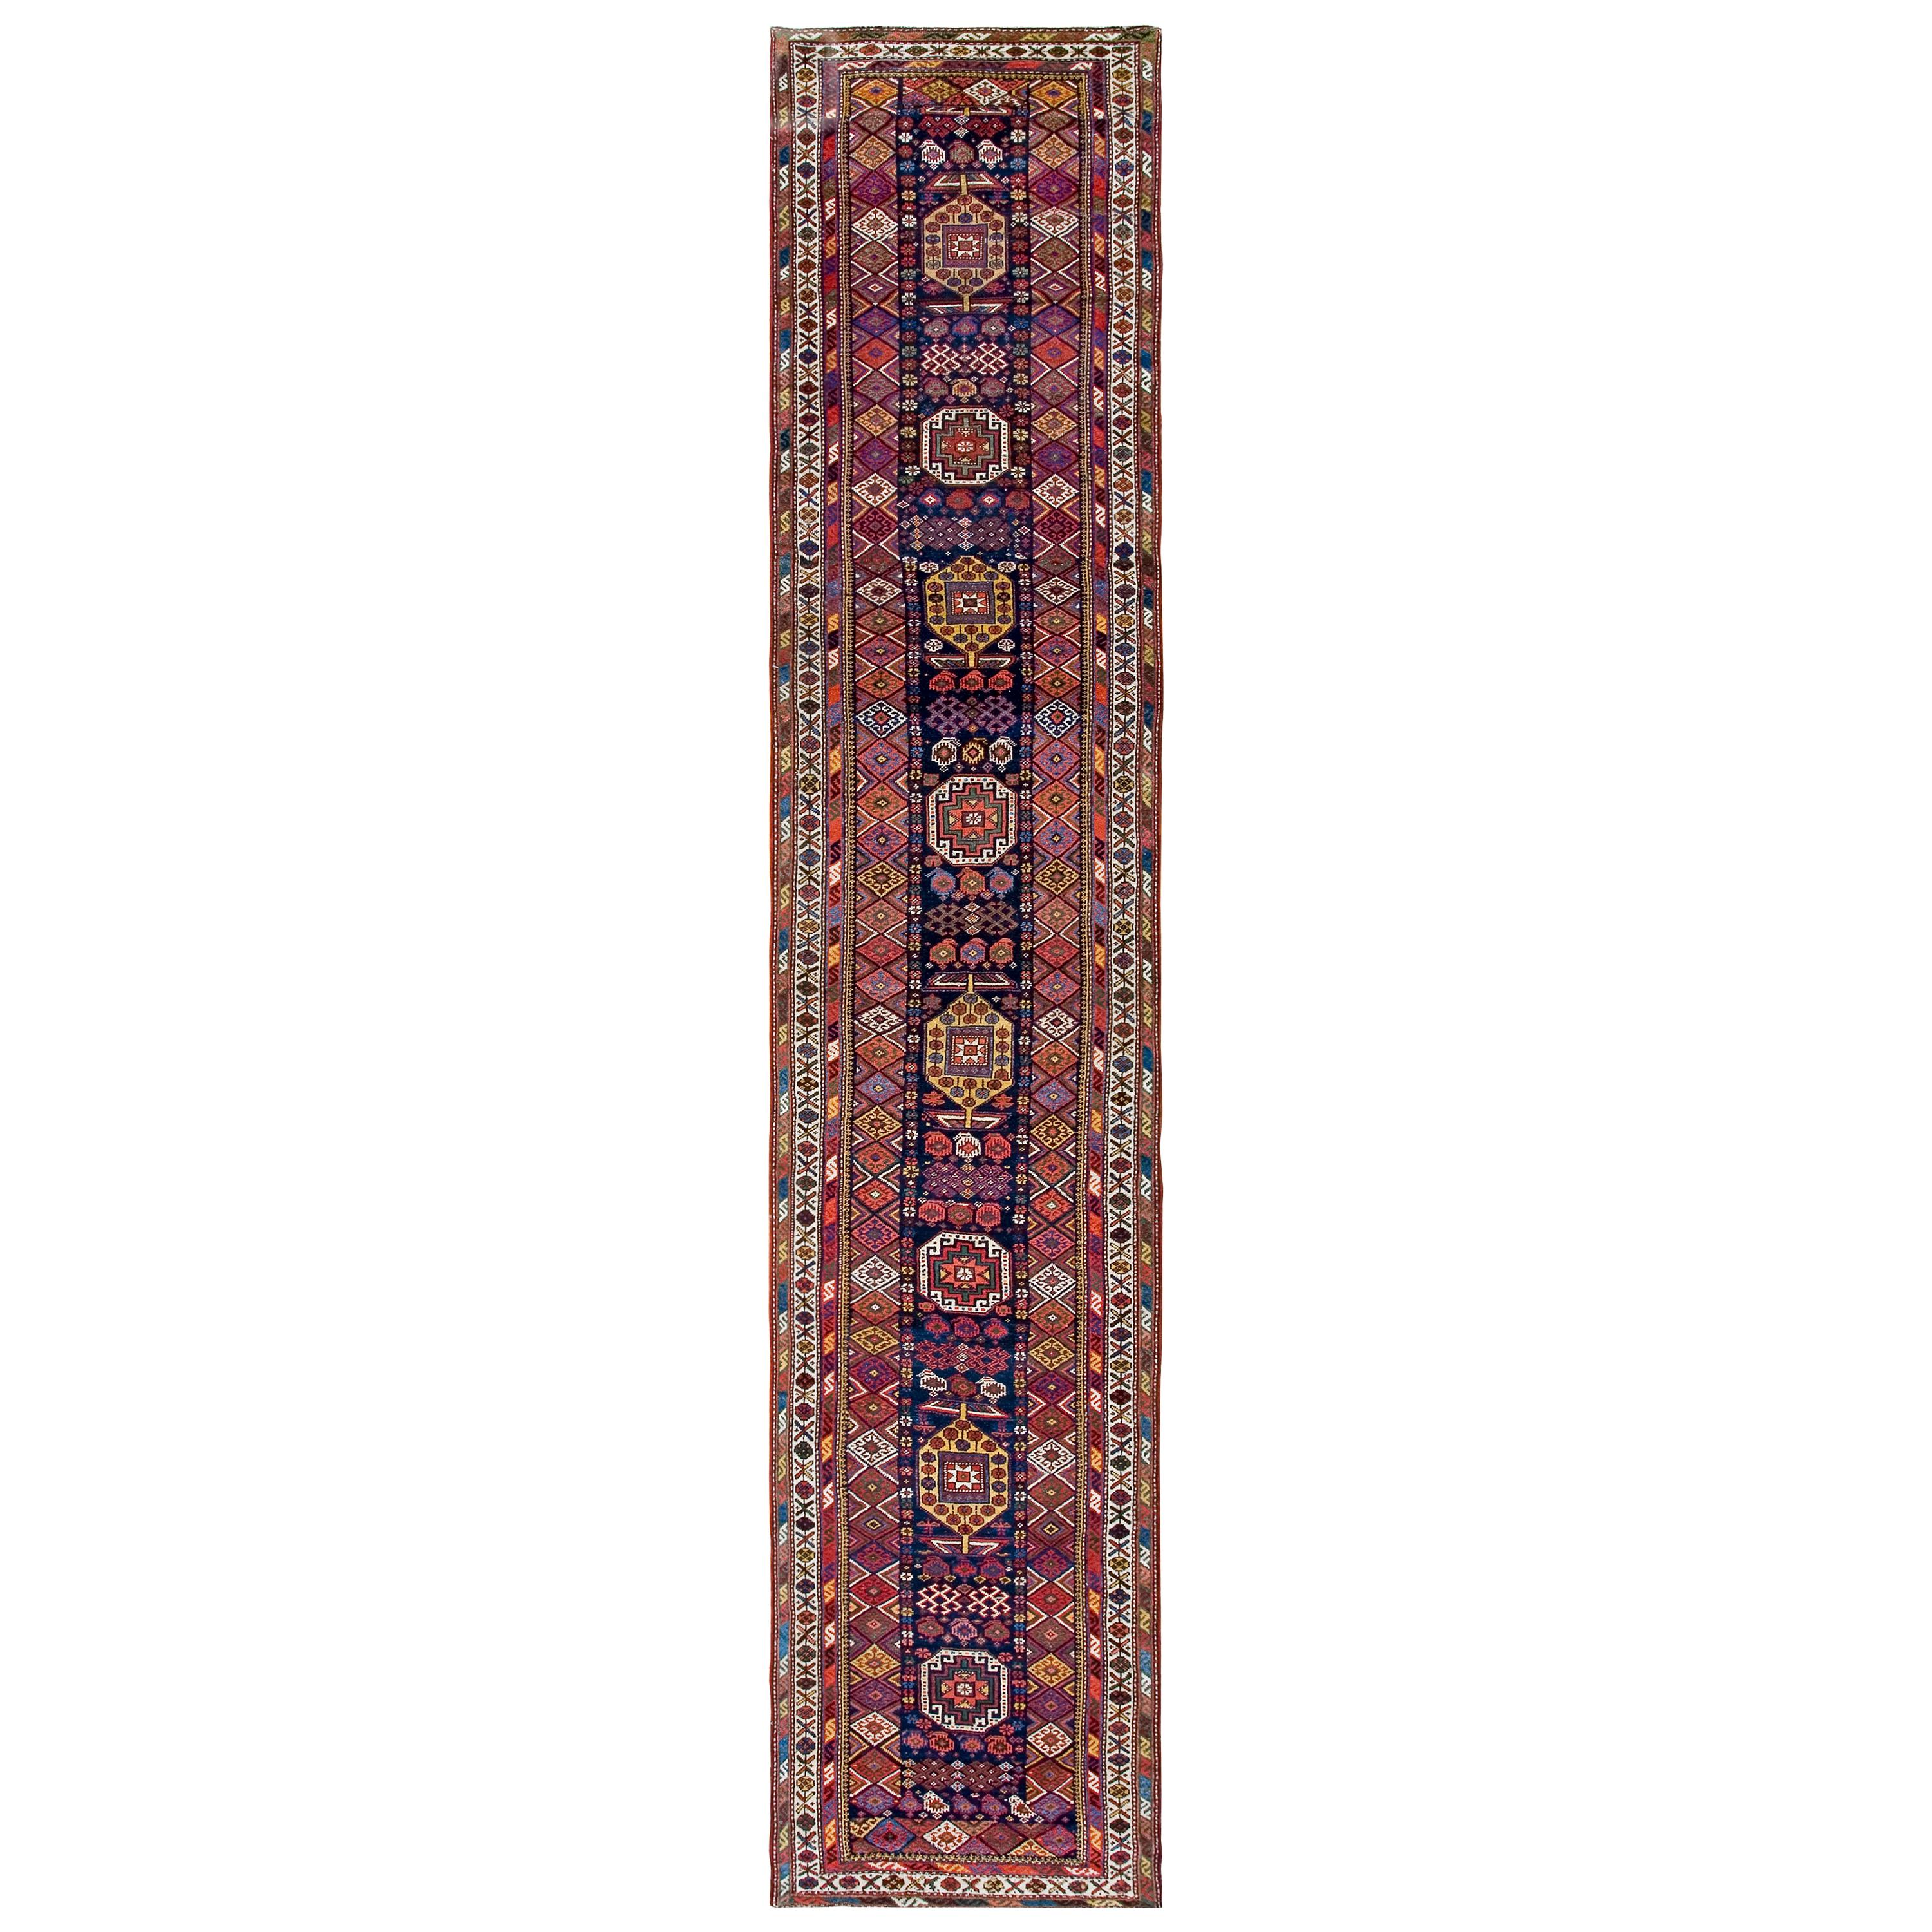 Early 20th Century W. Persian Kurdish Carpet ( 3'5" x 17'4" - 104 x 528 ) For Sale